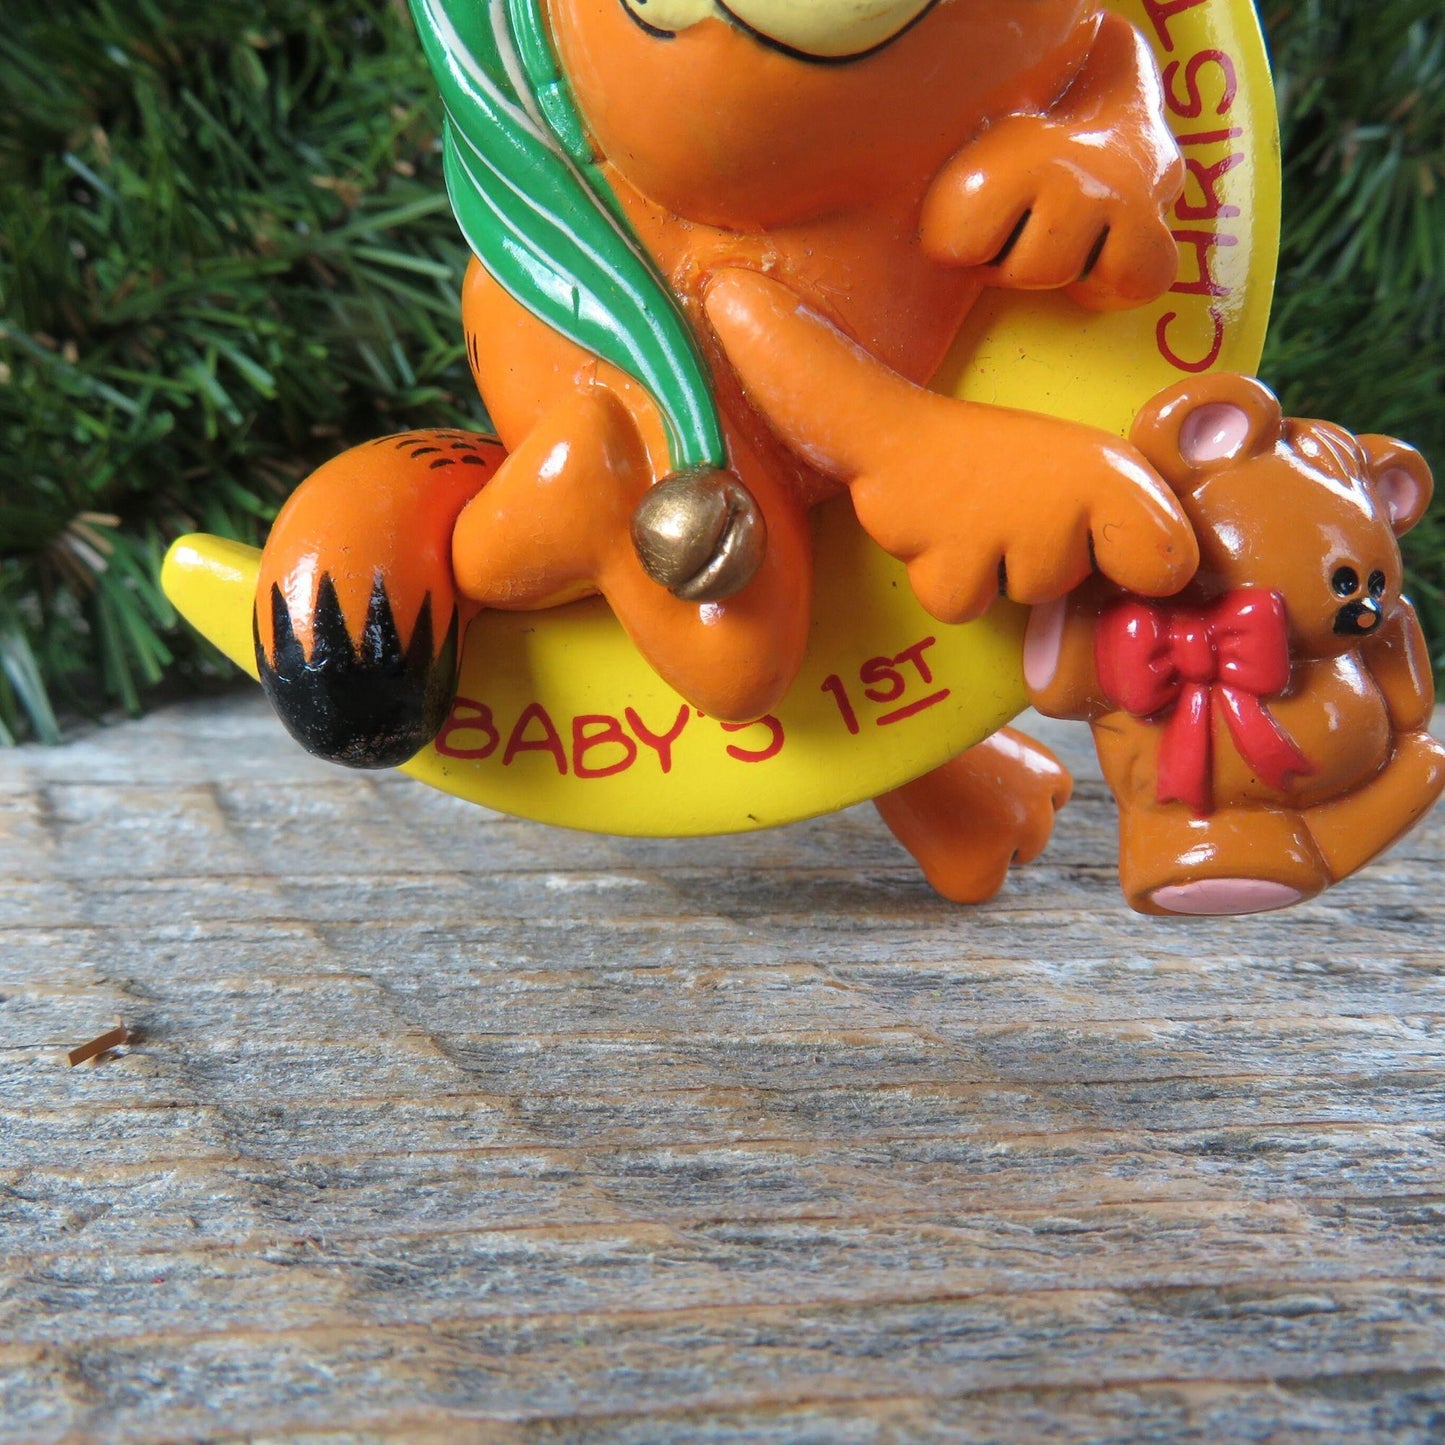 Vintage Garfield Teddy Bear Moon Ornament Enesco Sweet Beams Baby's First Christmas 1978